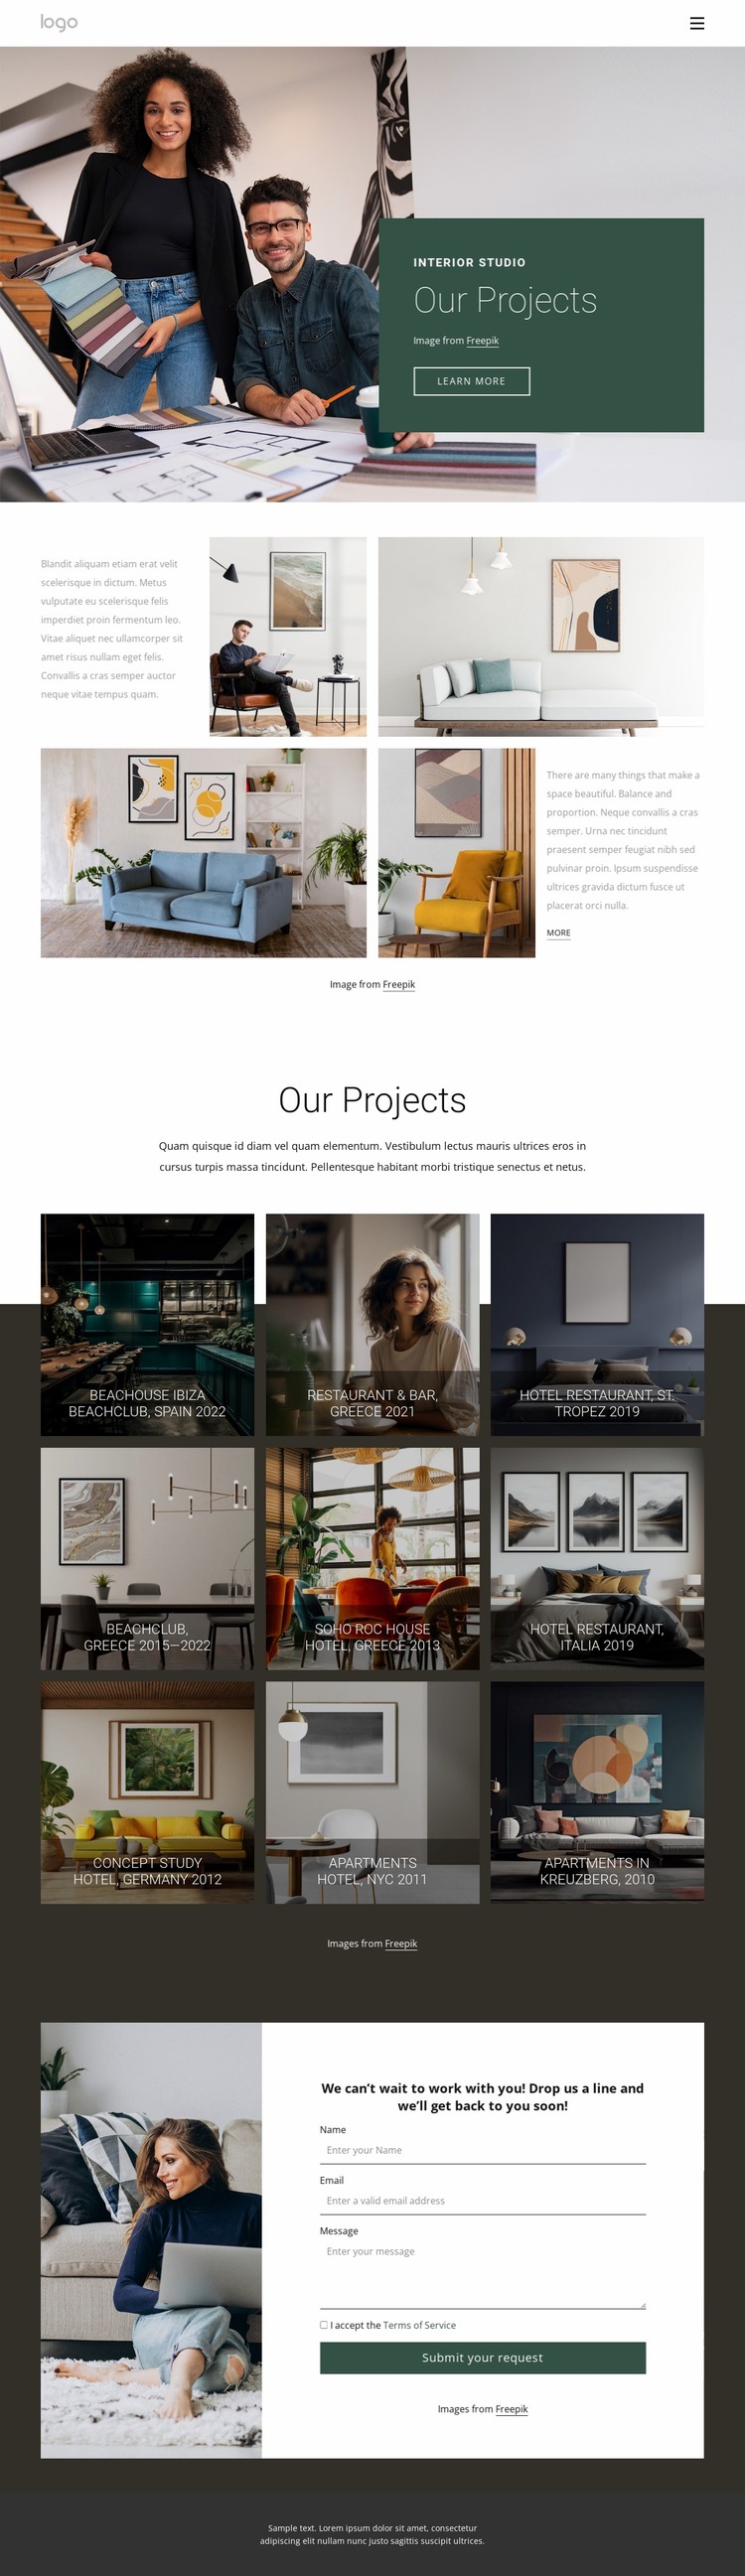 Interior and lighting design Website Mockup